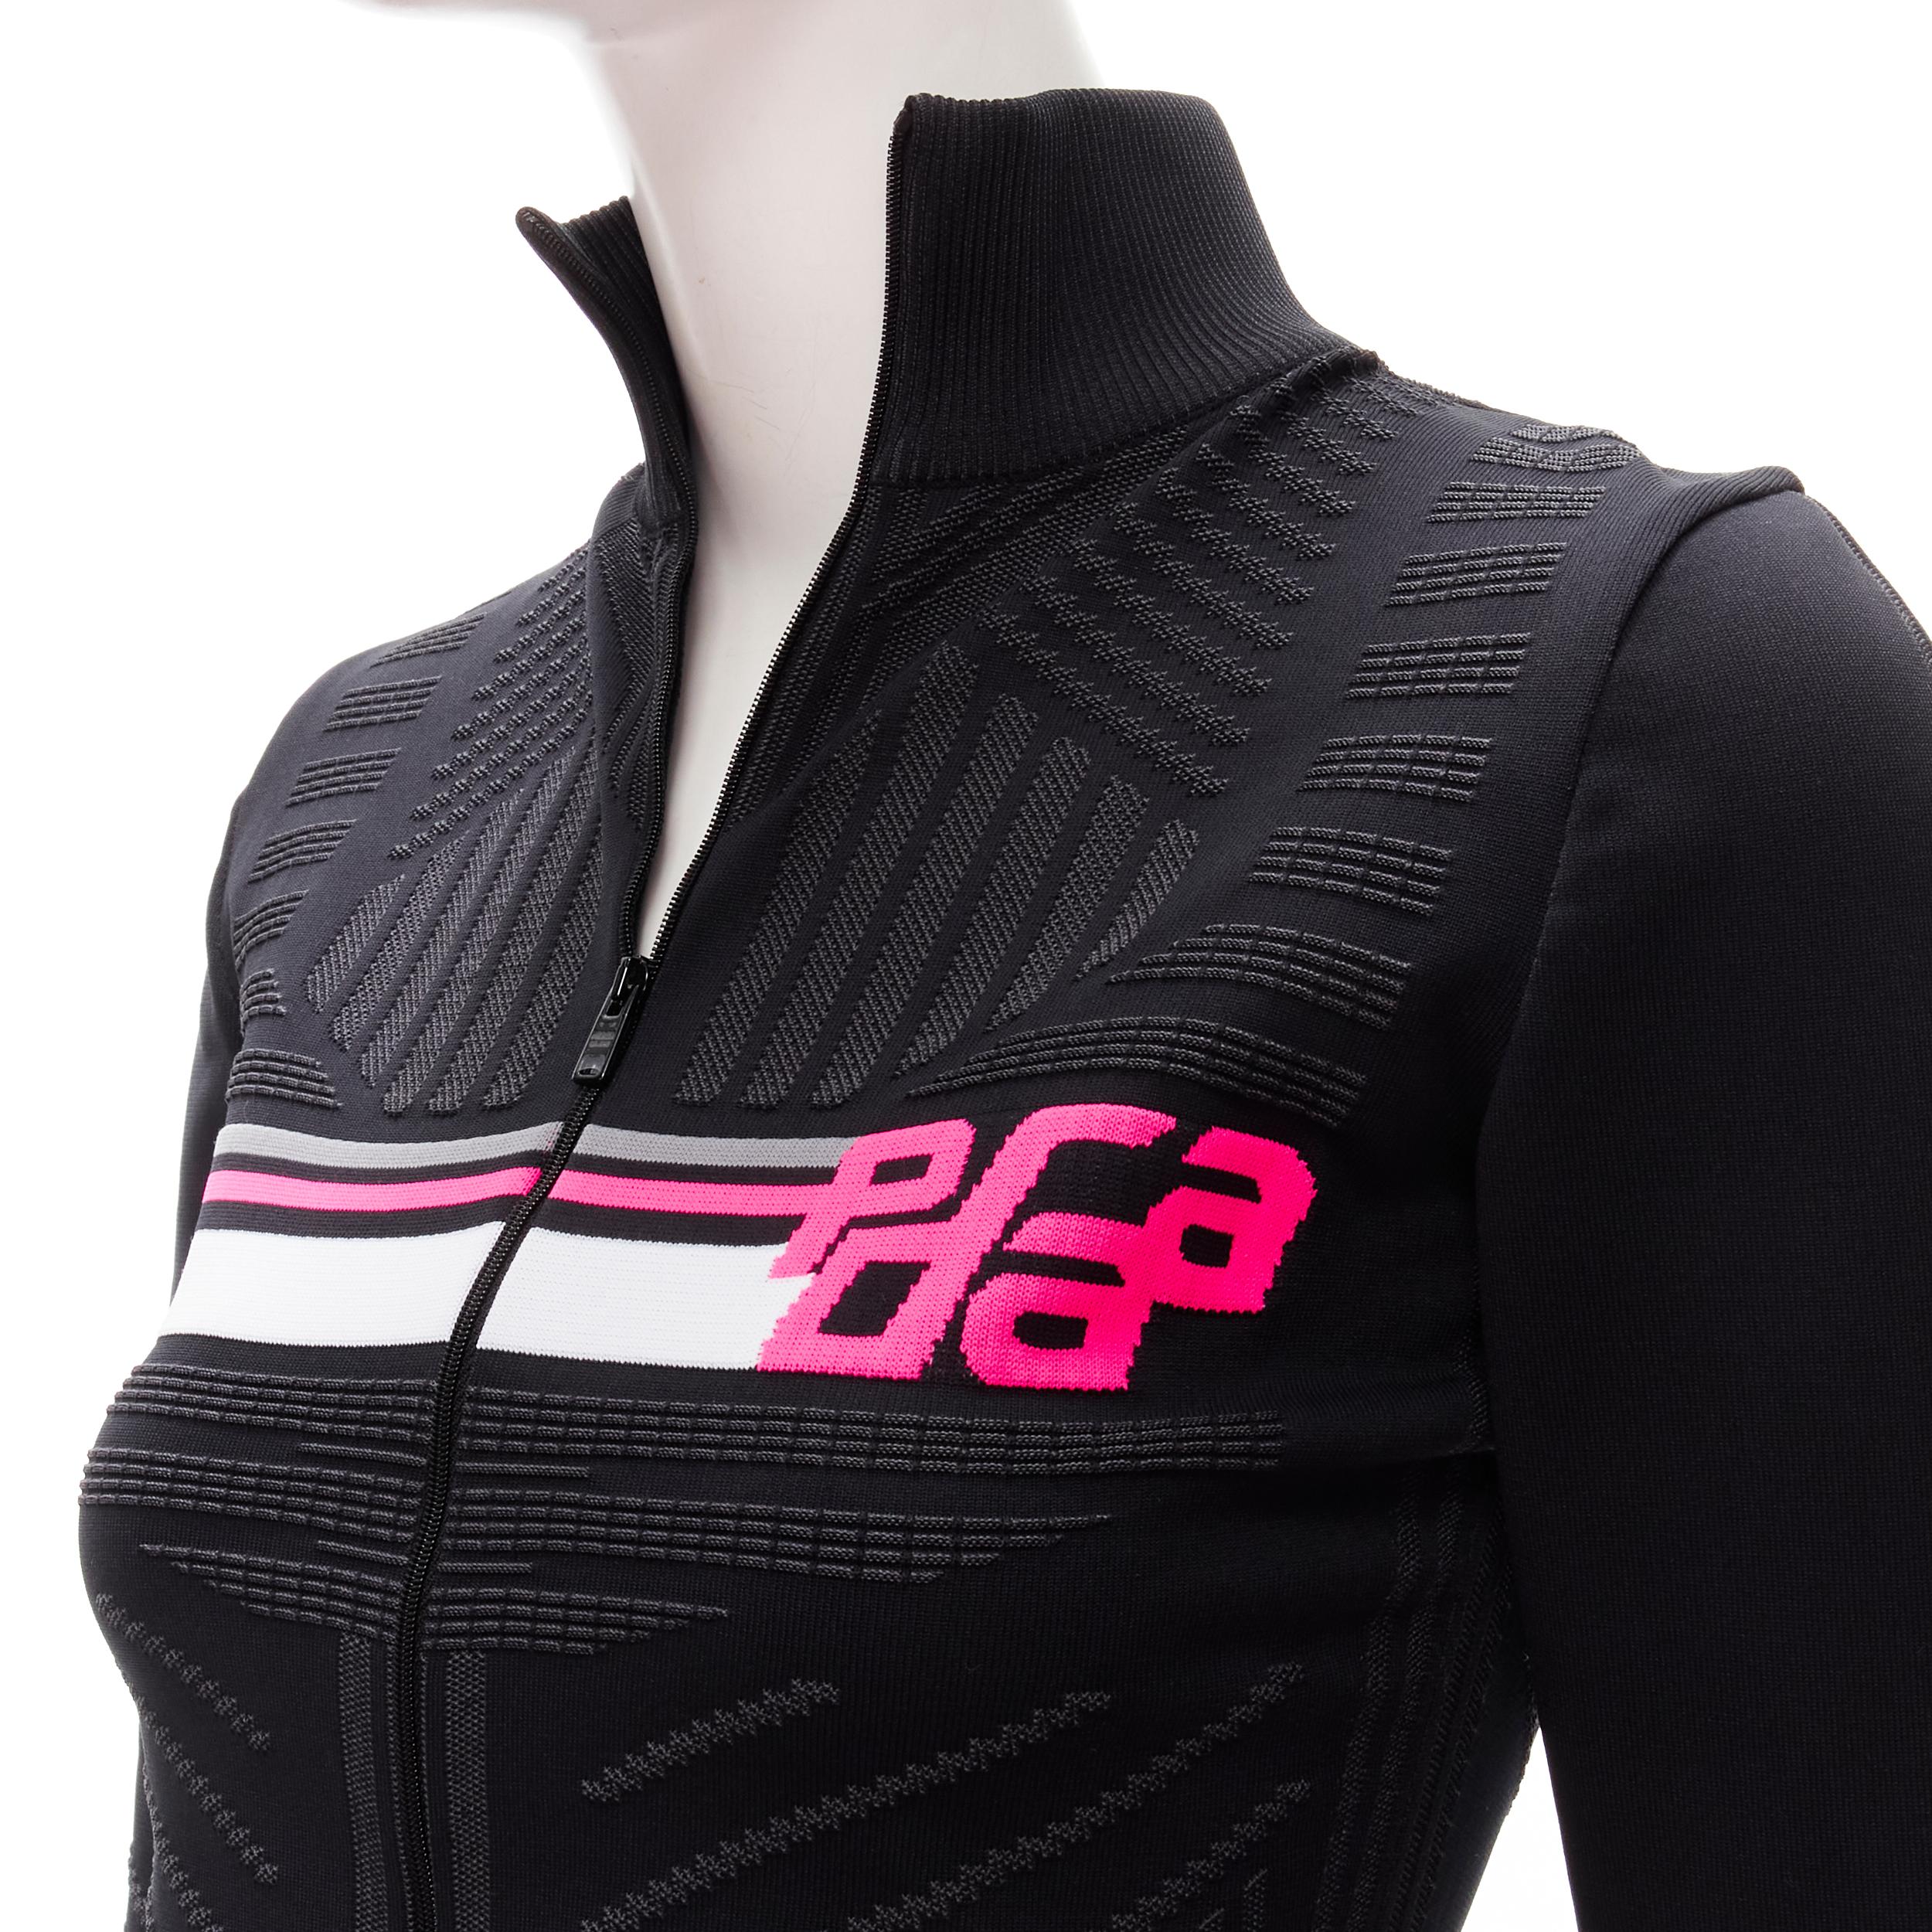 PRADA 2018 pink graphic Racing Sports Logo black bodycon zip up jacket XS
Brand: Prada
Designer: Miuccia Prada
Collection: Fall Winter 2018 
Color: Black
Pattern: Solid
Closure: Zip
Extra Detail: Racing Graphic Prada logo. Intarsia body-con knit.